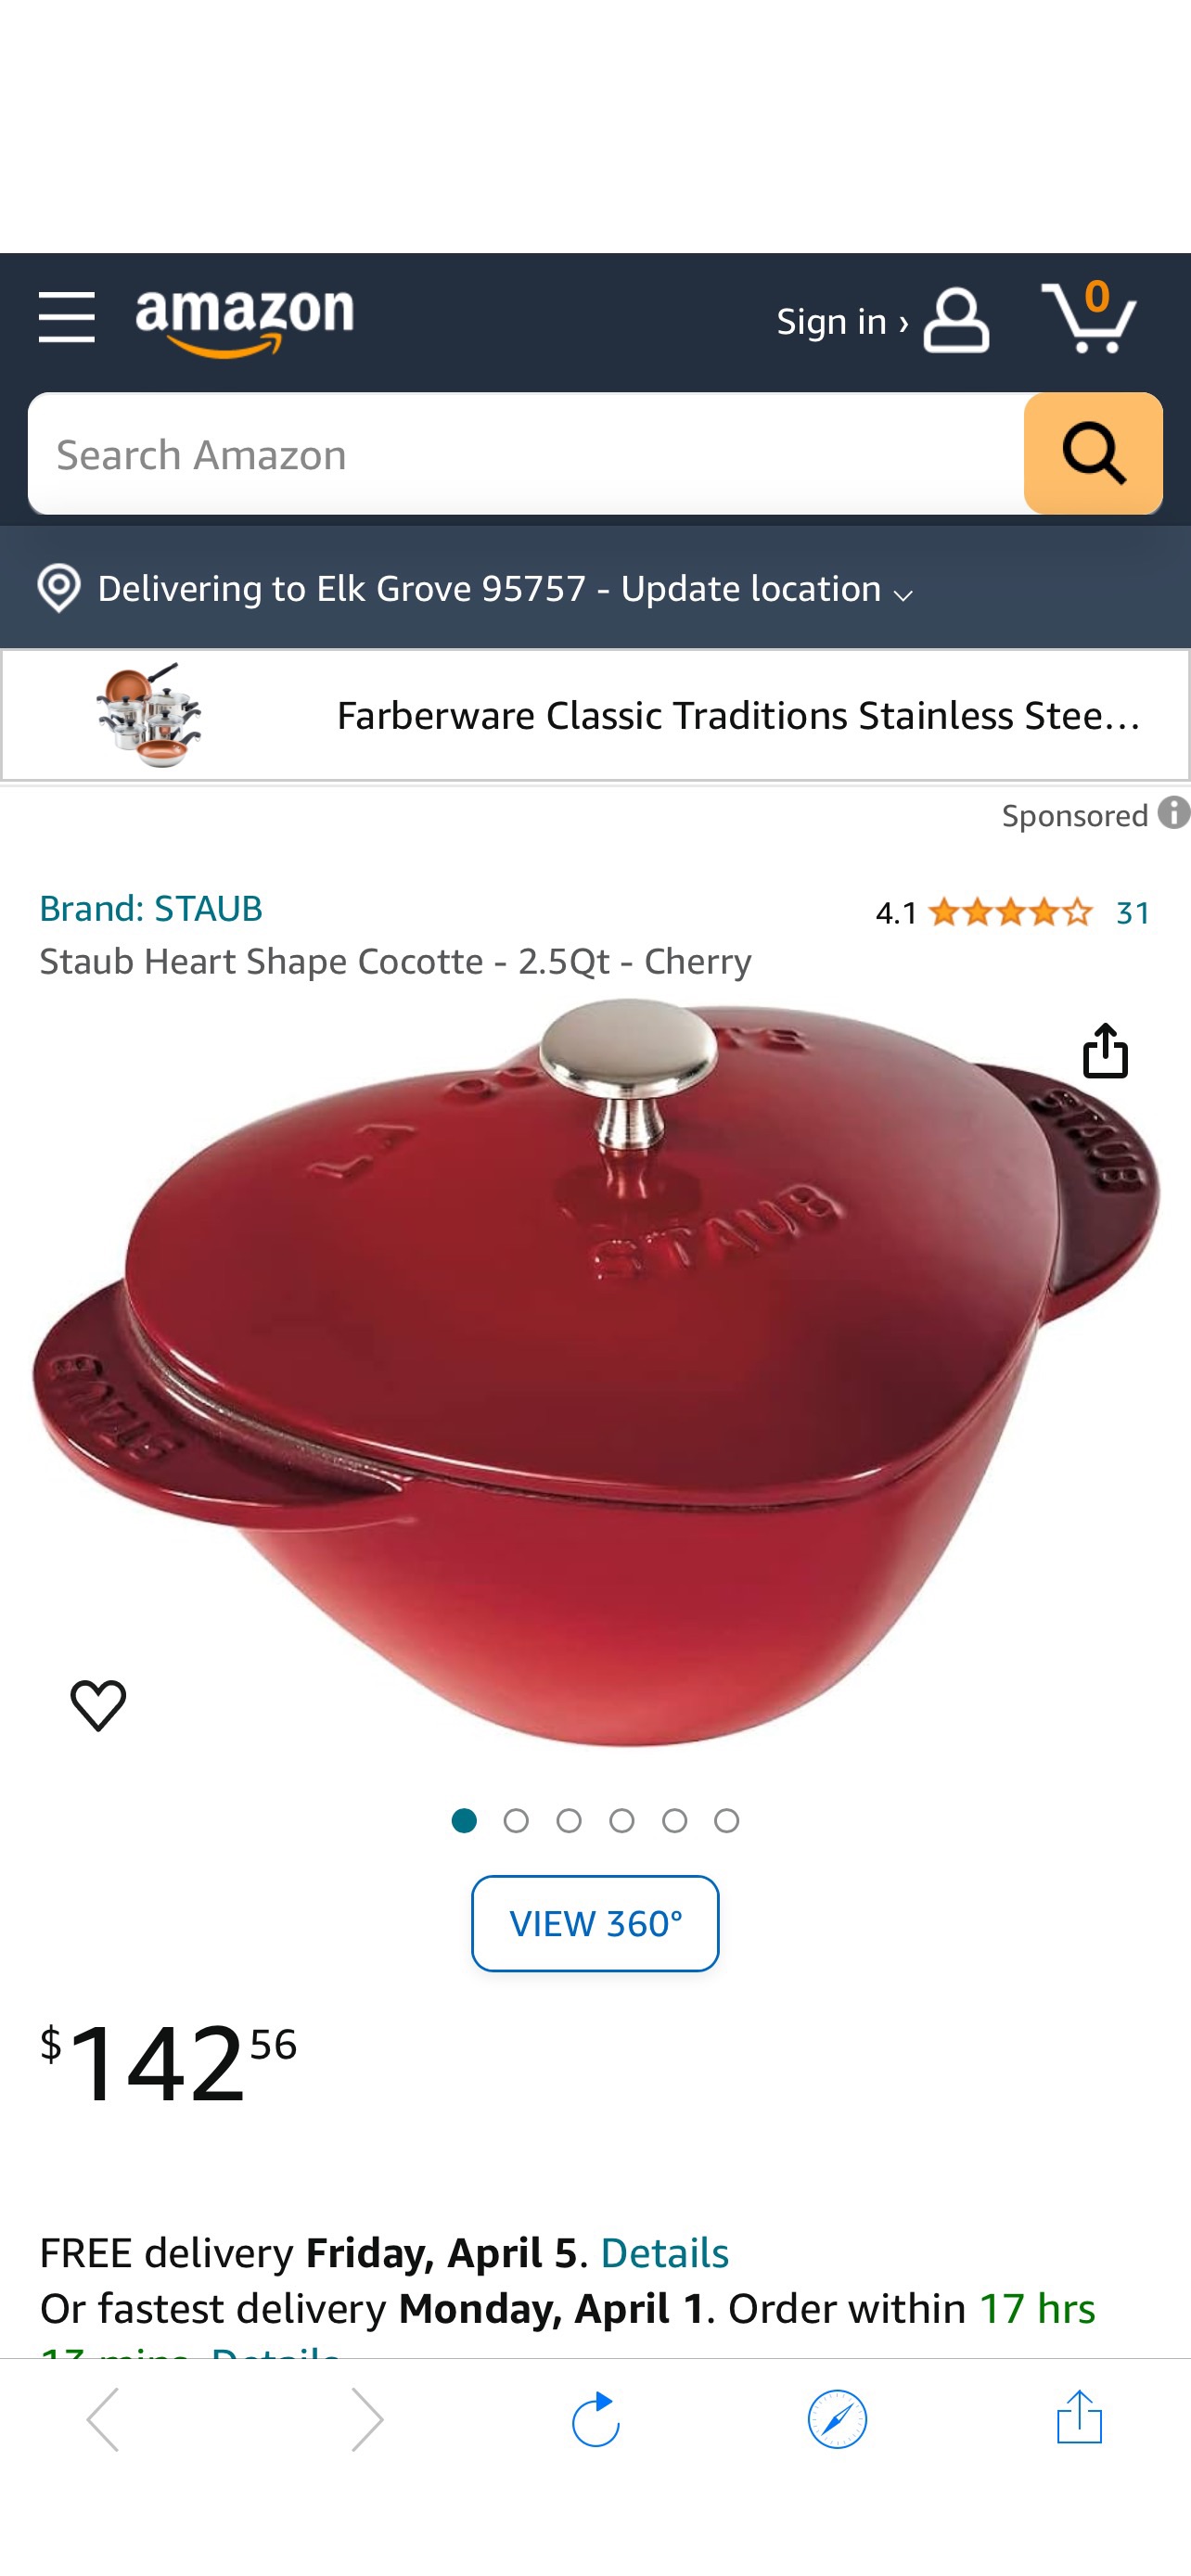 Amazon.com: Staub Heart Shape Cocotte - 2.5Qt - Cherry: Dutch Ovens: Home & Kitchen